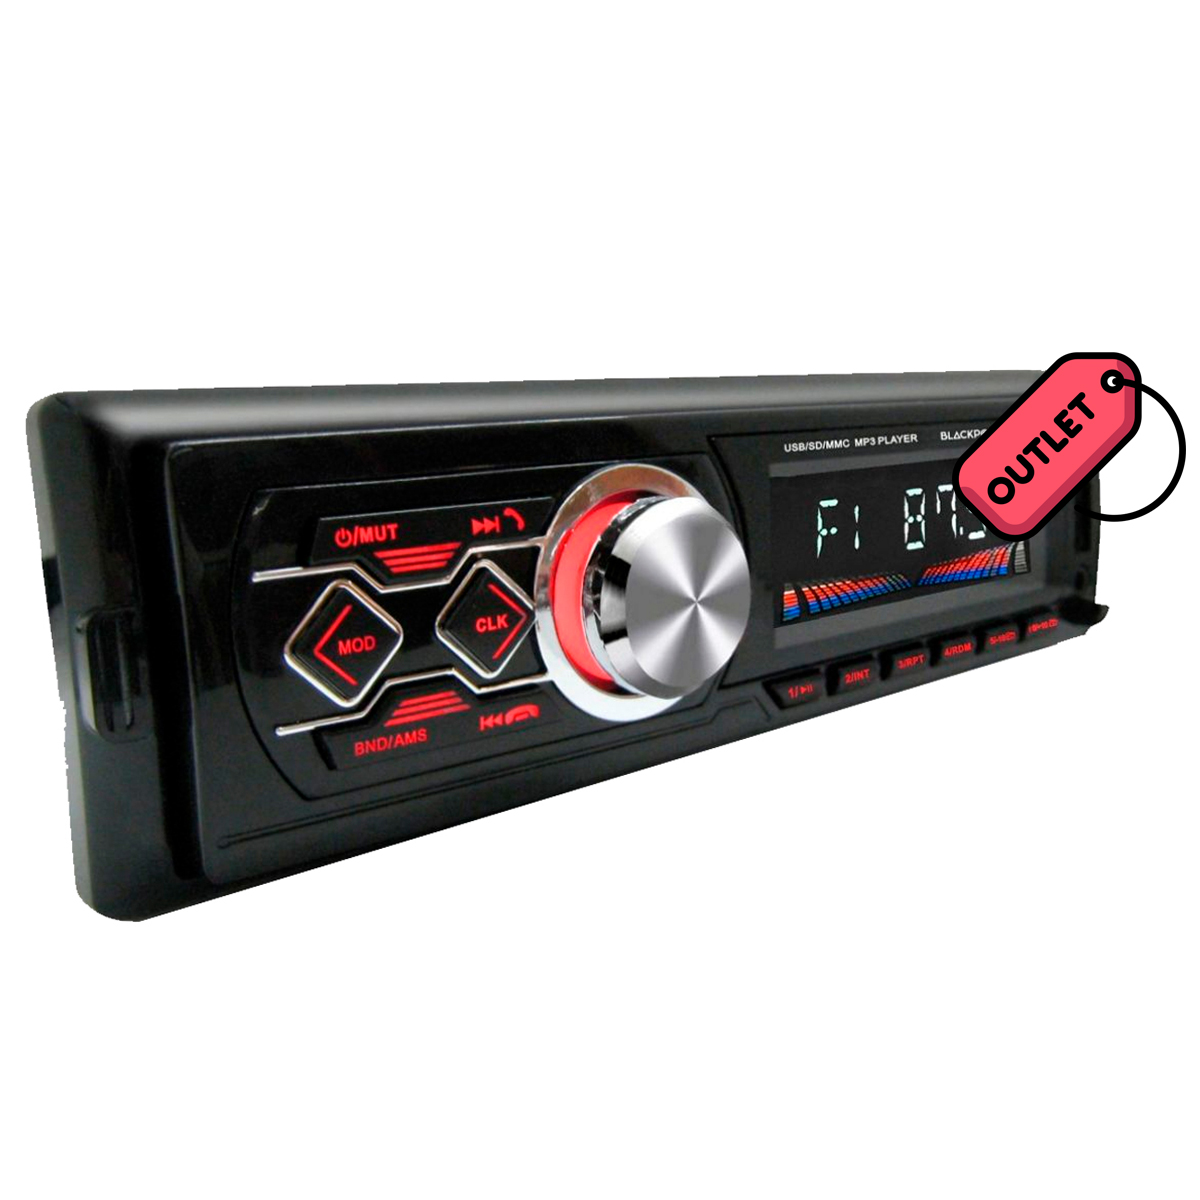 X-32-OUT Blackpoint                                                   | AUTOESTÉREO BLUETOOTH BLACKPOINT FM AUX USB POTENCIA X-32 OUTLET                                                                                                                                                                                          